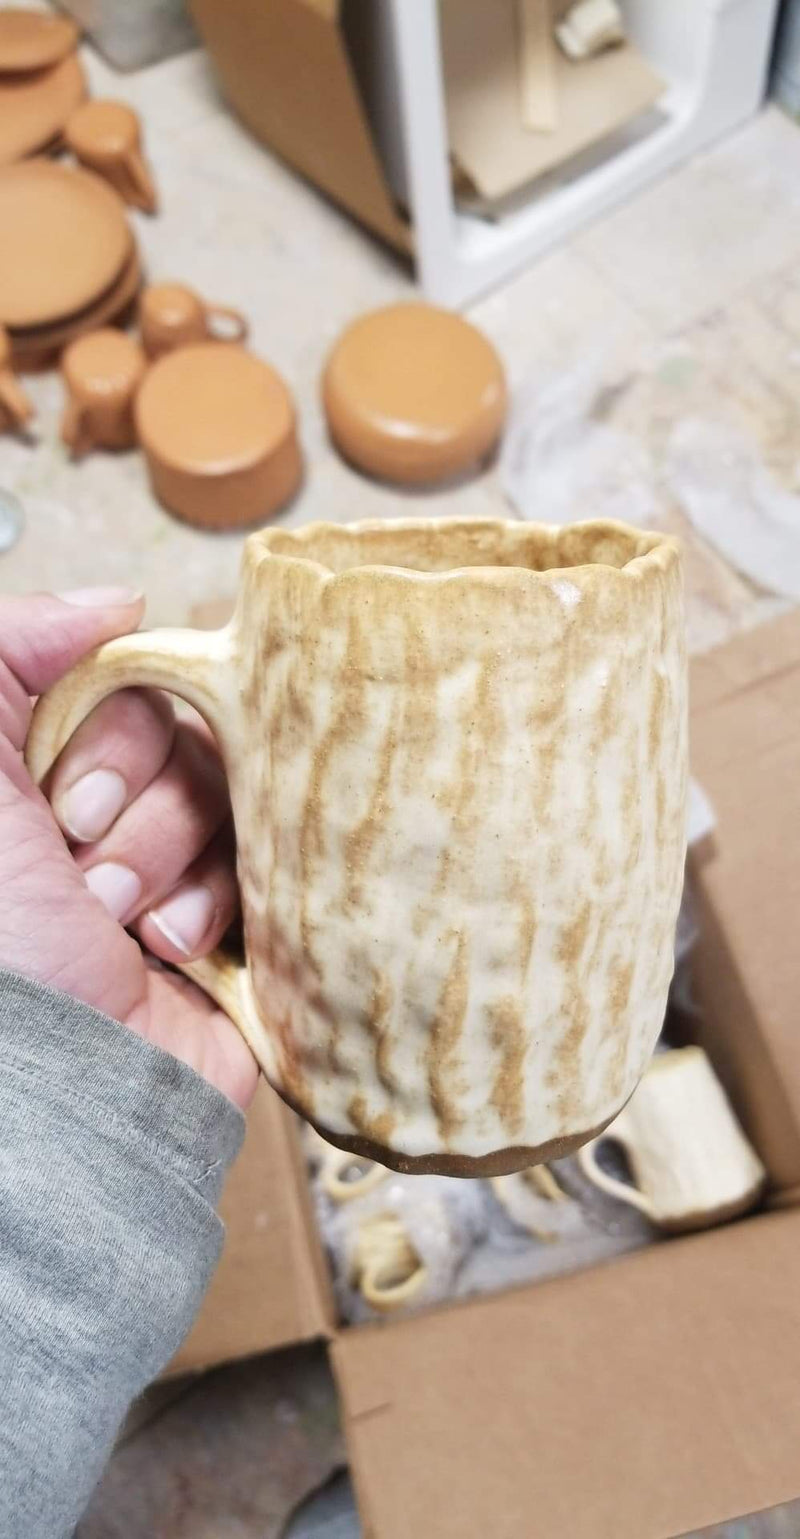 Tree Trunk Pottery Mug